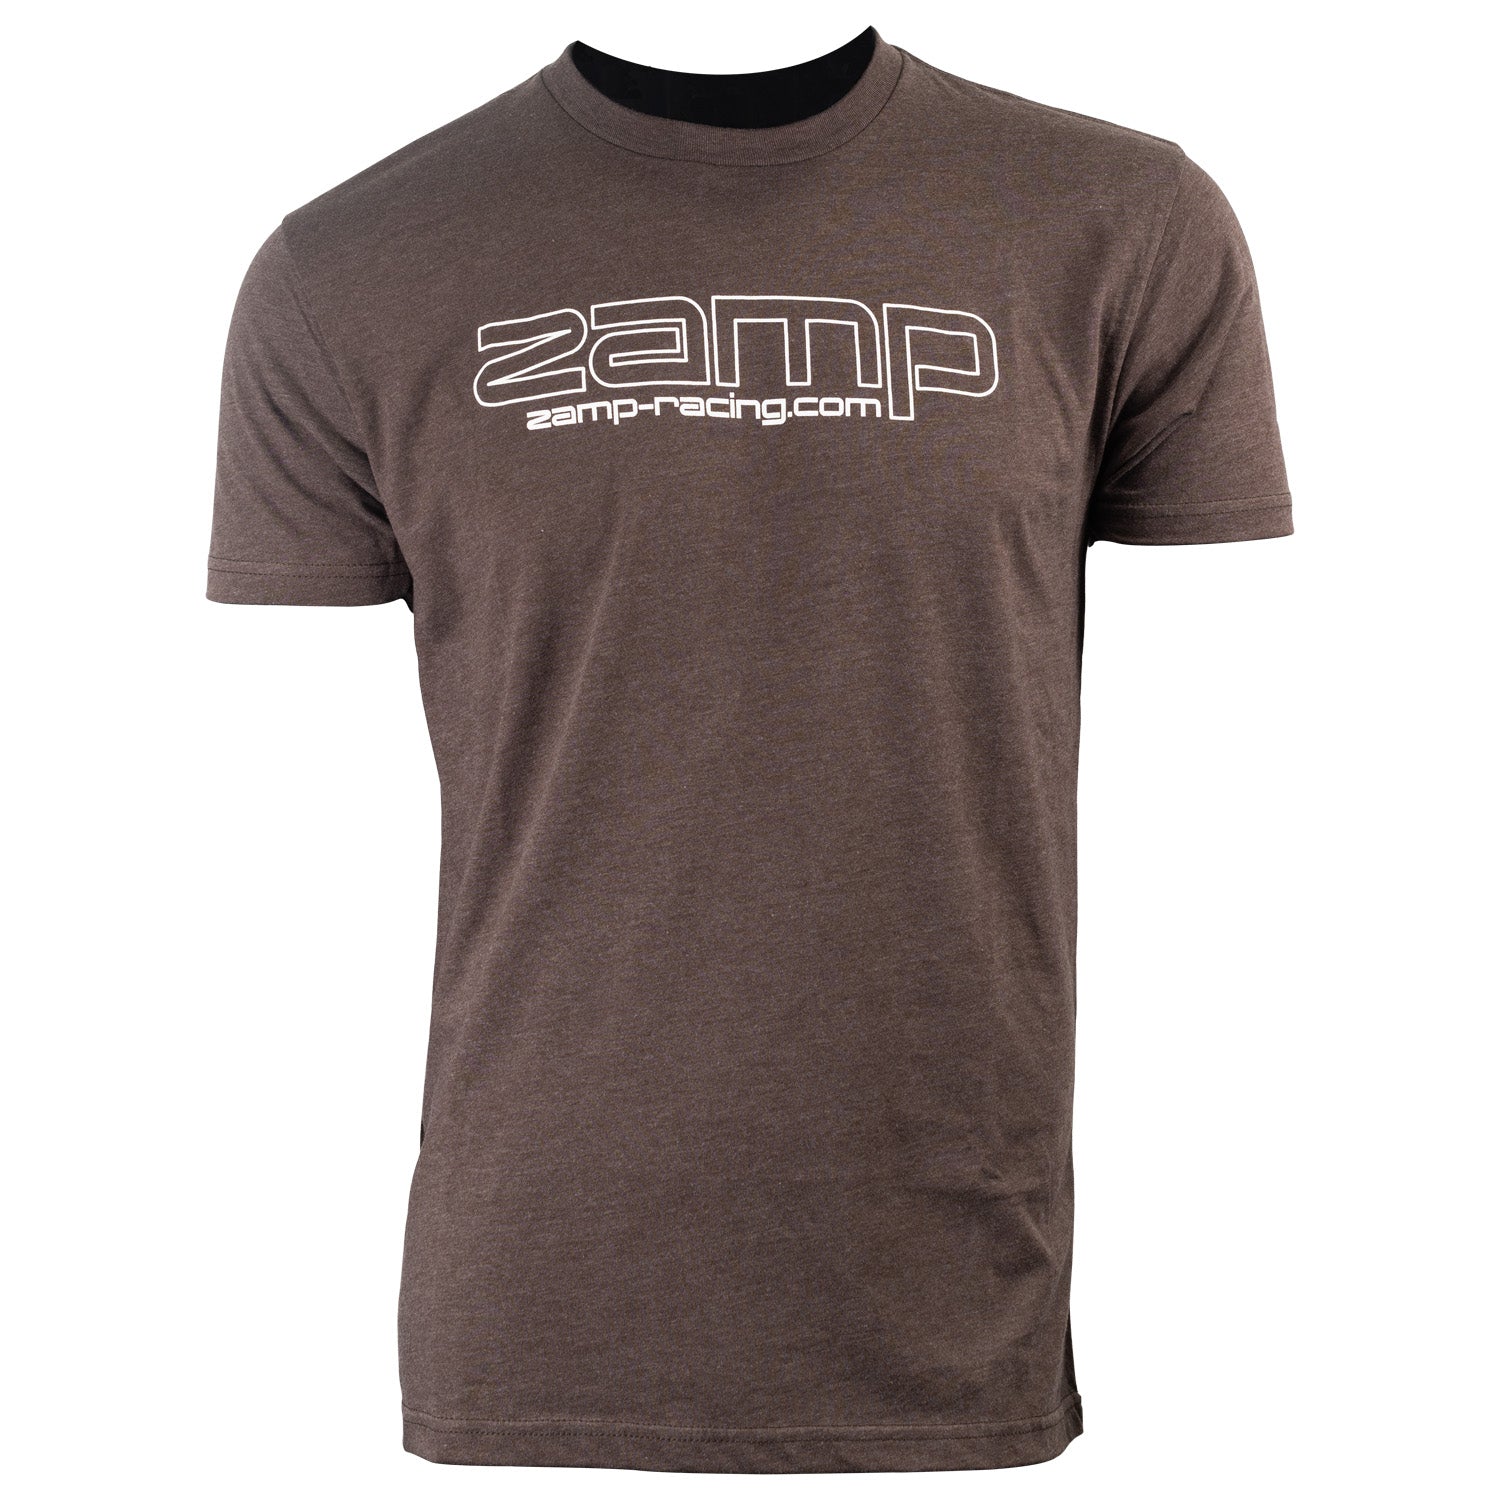 ZAMP Racing Est 2000 T-Shirt Espresso Large N003007L